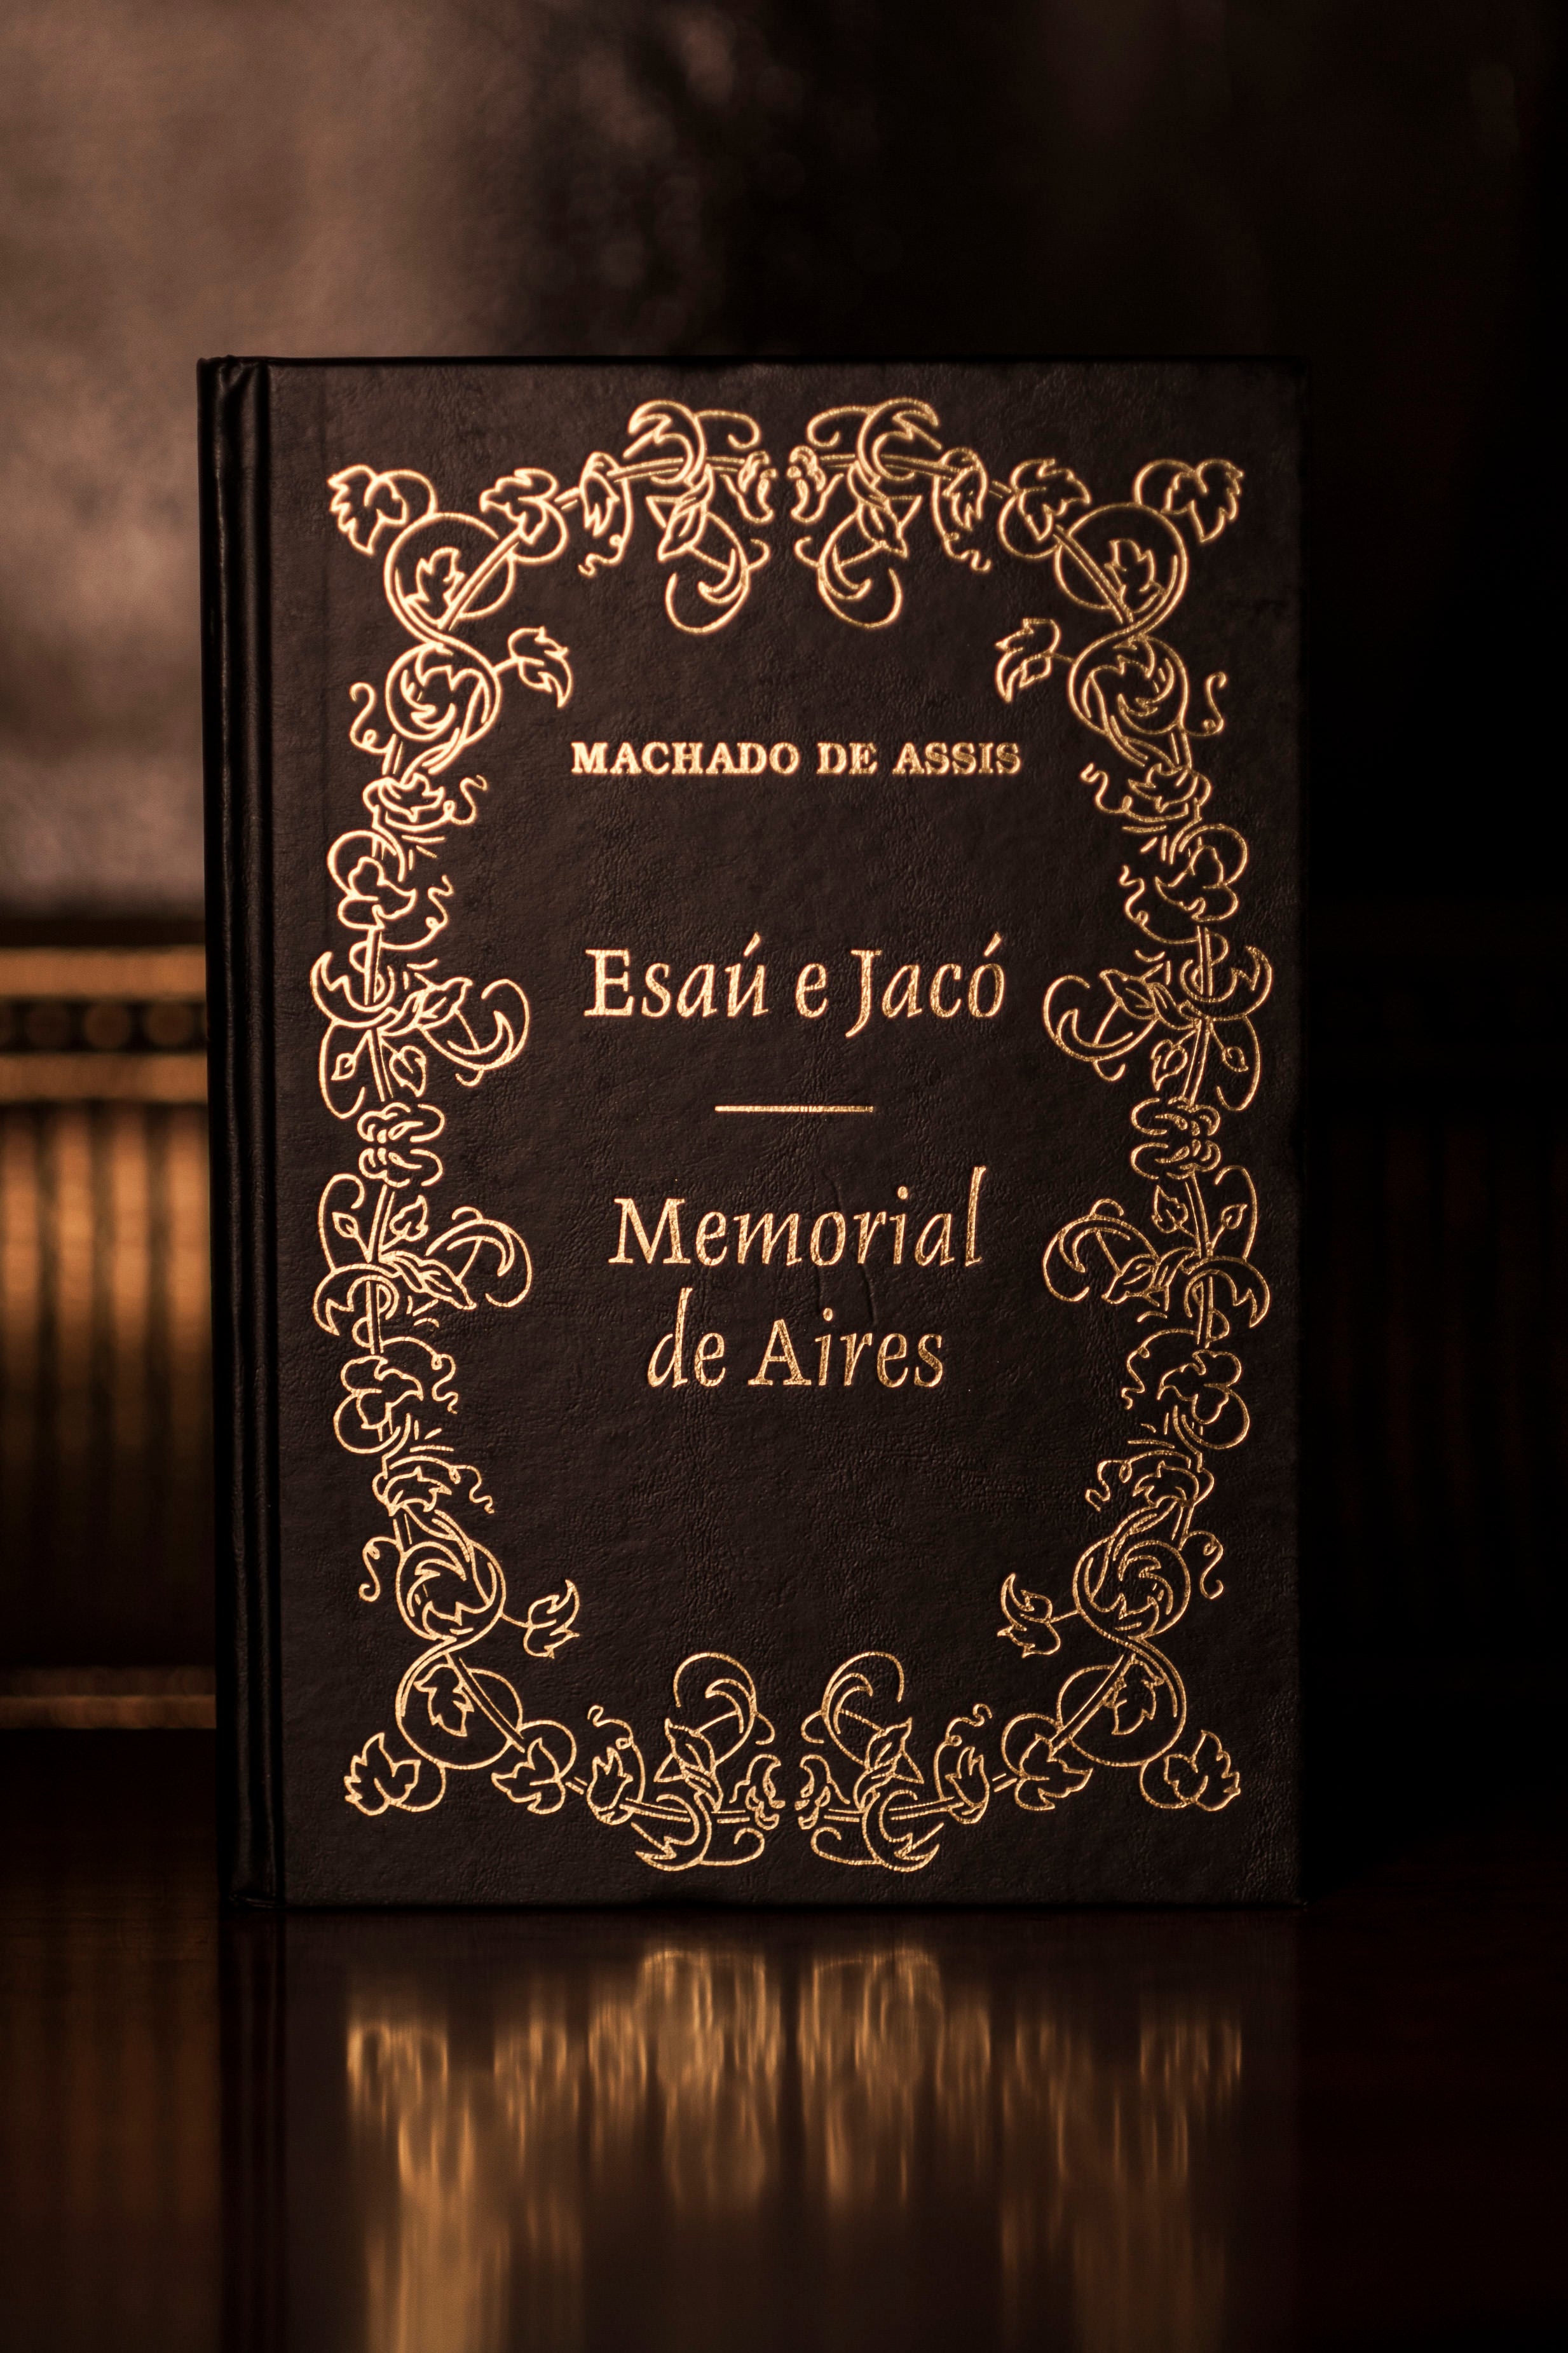 Esaú e Jacó / Memorial de Aires by Machado de Assis